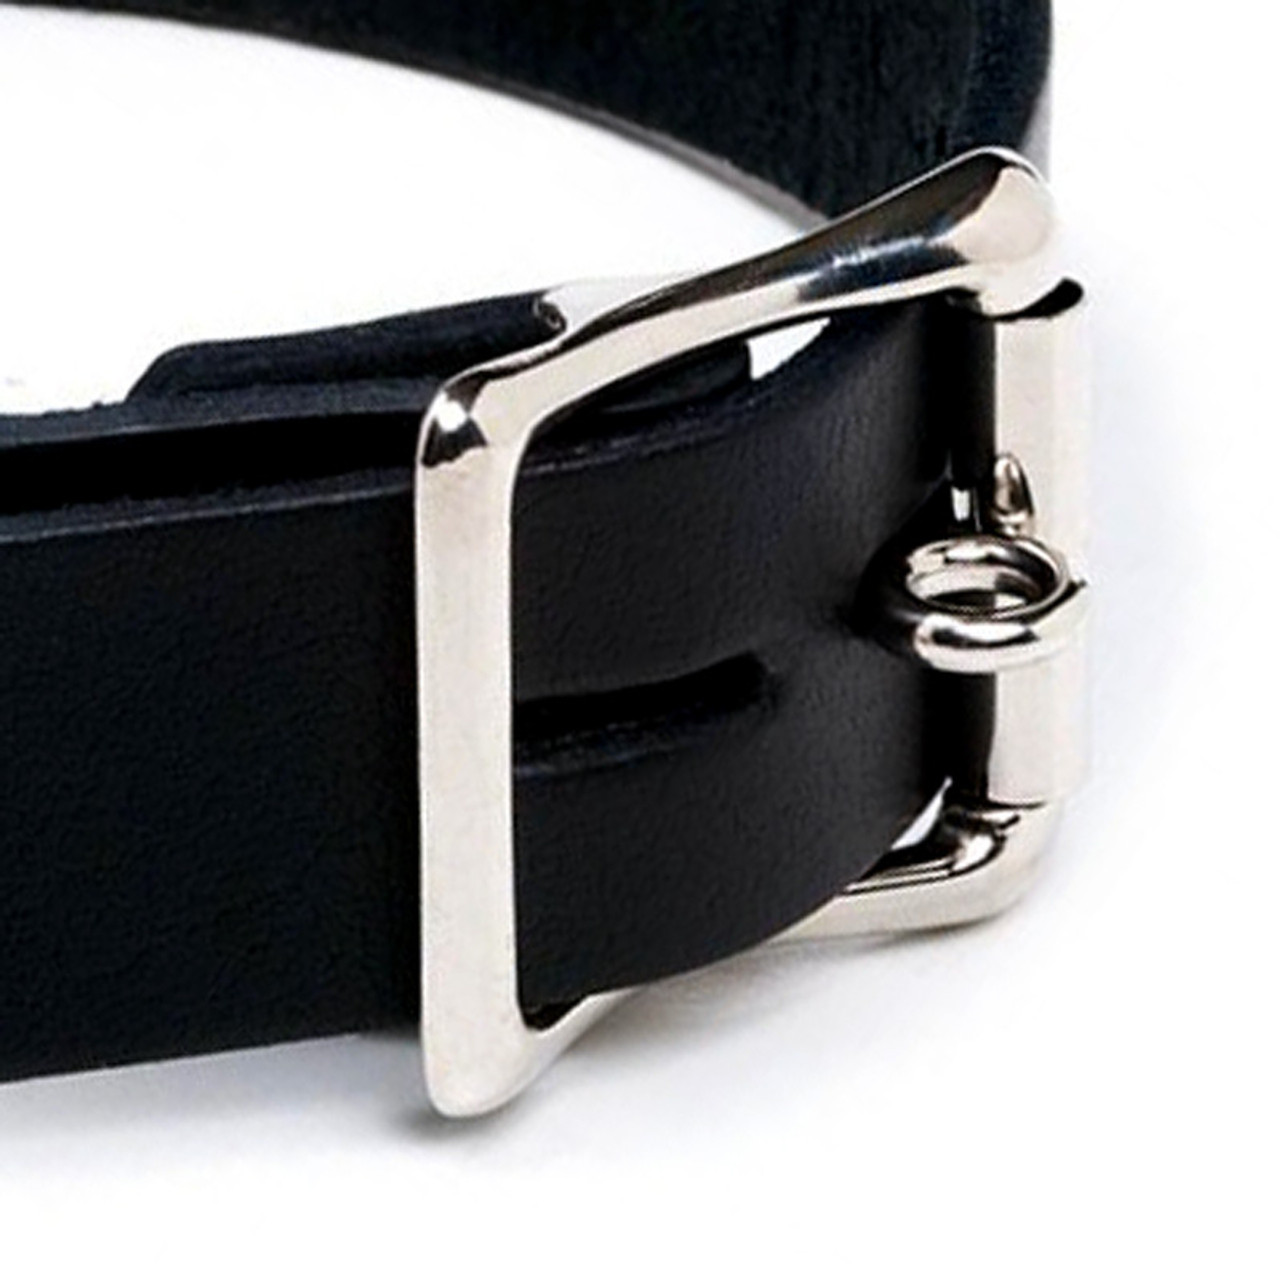 Buy the Spiked Black Leather Adjustable Locking Collar - The StockRoom